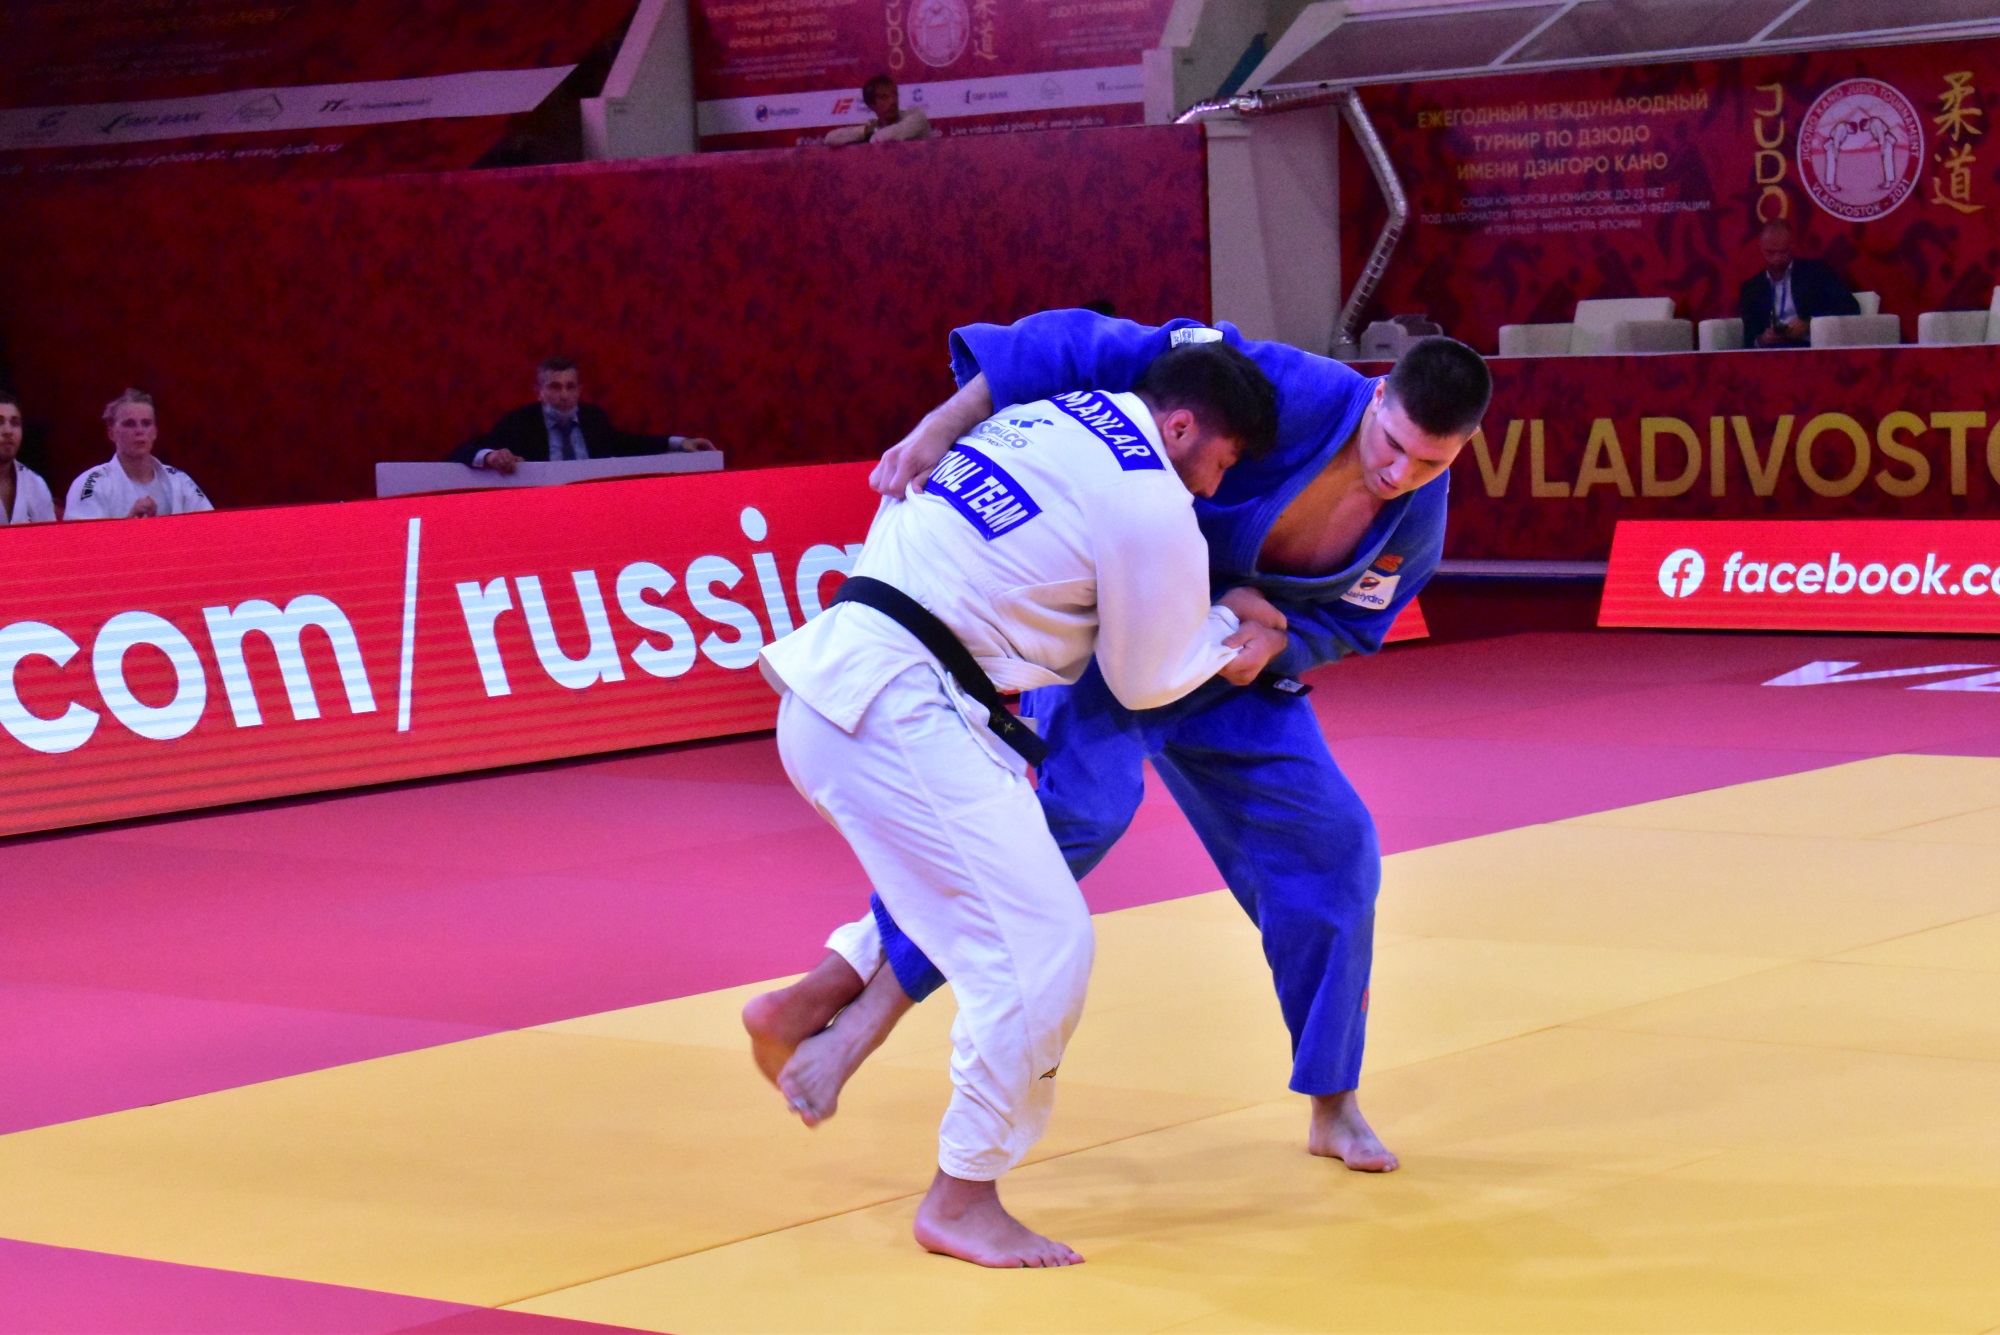 Дзюдо дзигиро кано judo kano Olympics Tokyo 2020 paris 2024